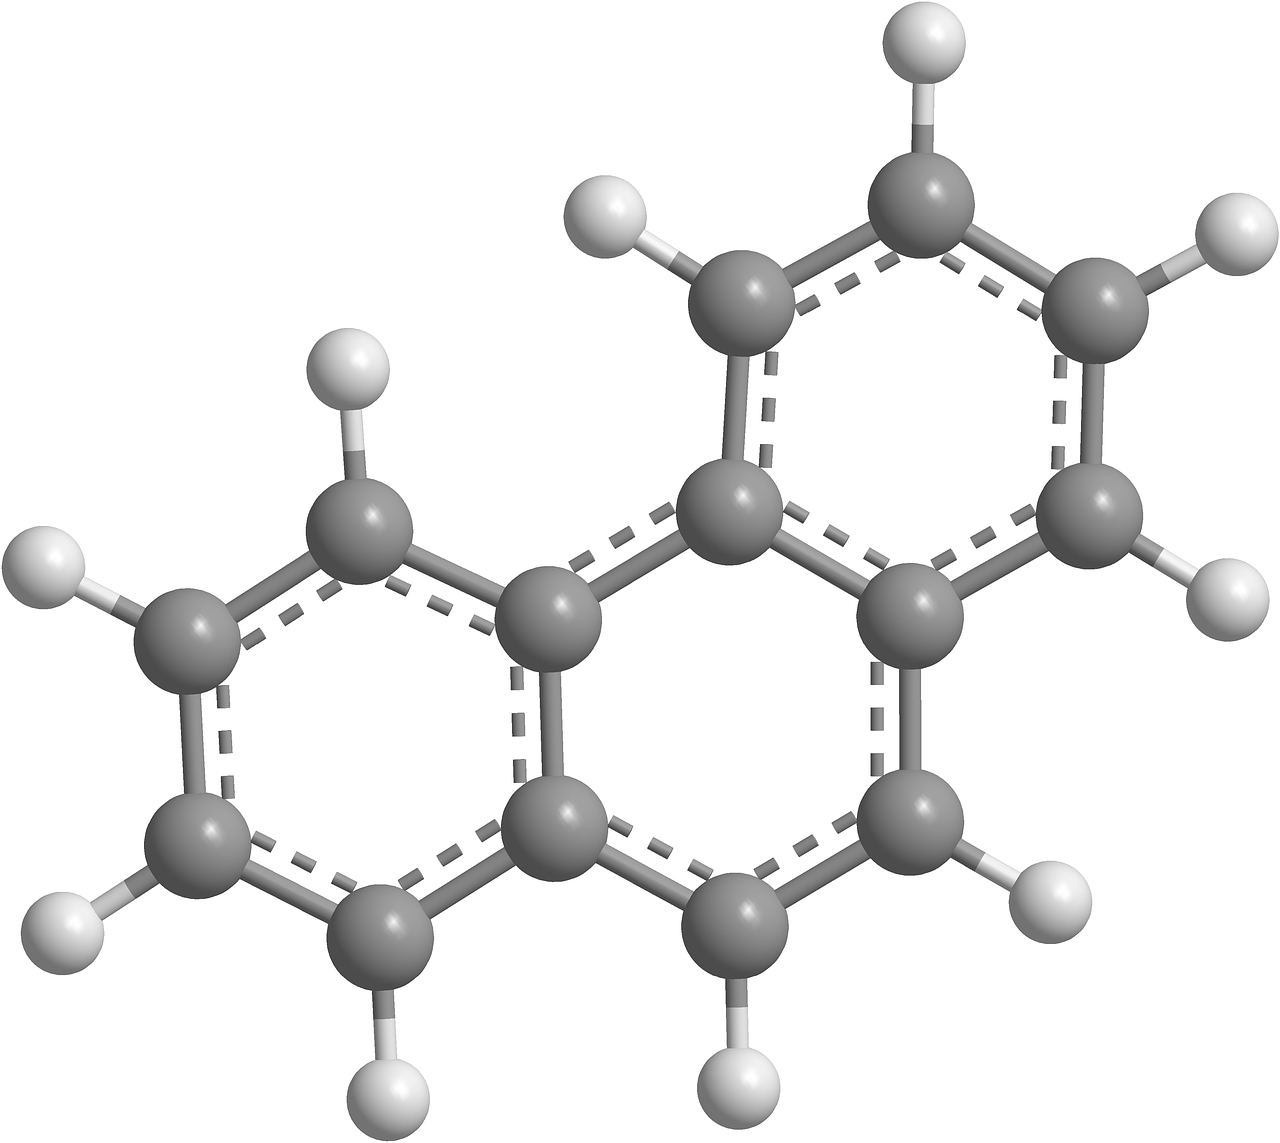 phenanthrene hydrocarbon aromatic chemistry free photo